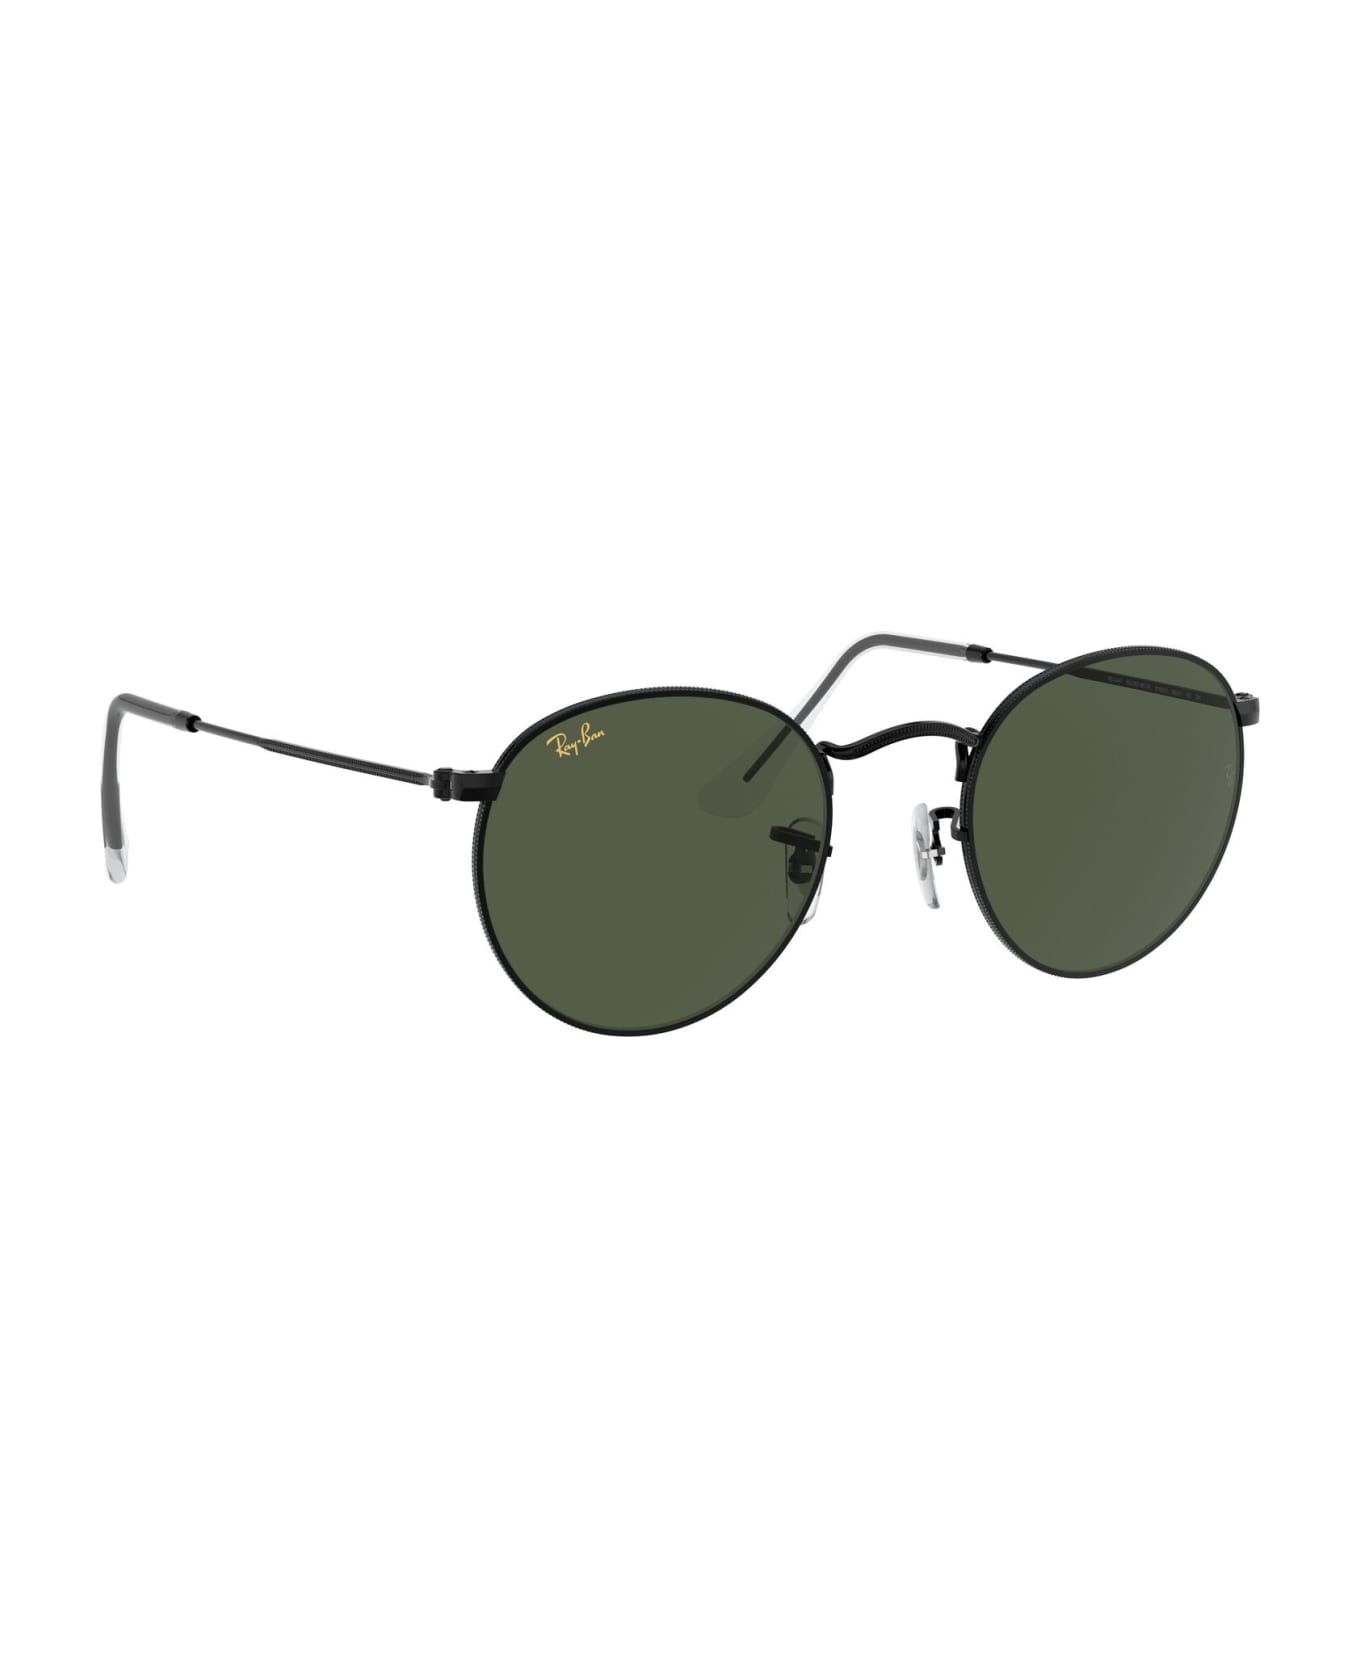 Ray-Ban Sunglasses - Nero/Verde サングラス